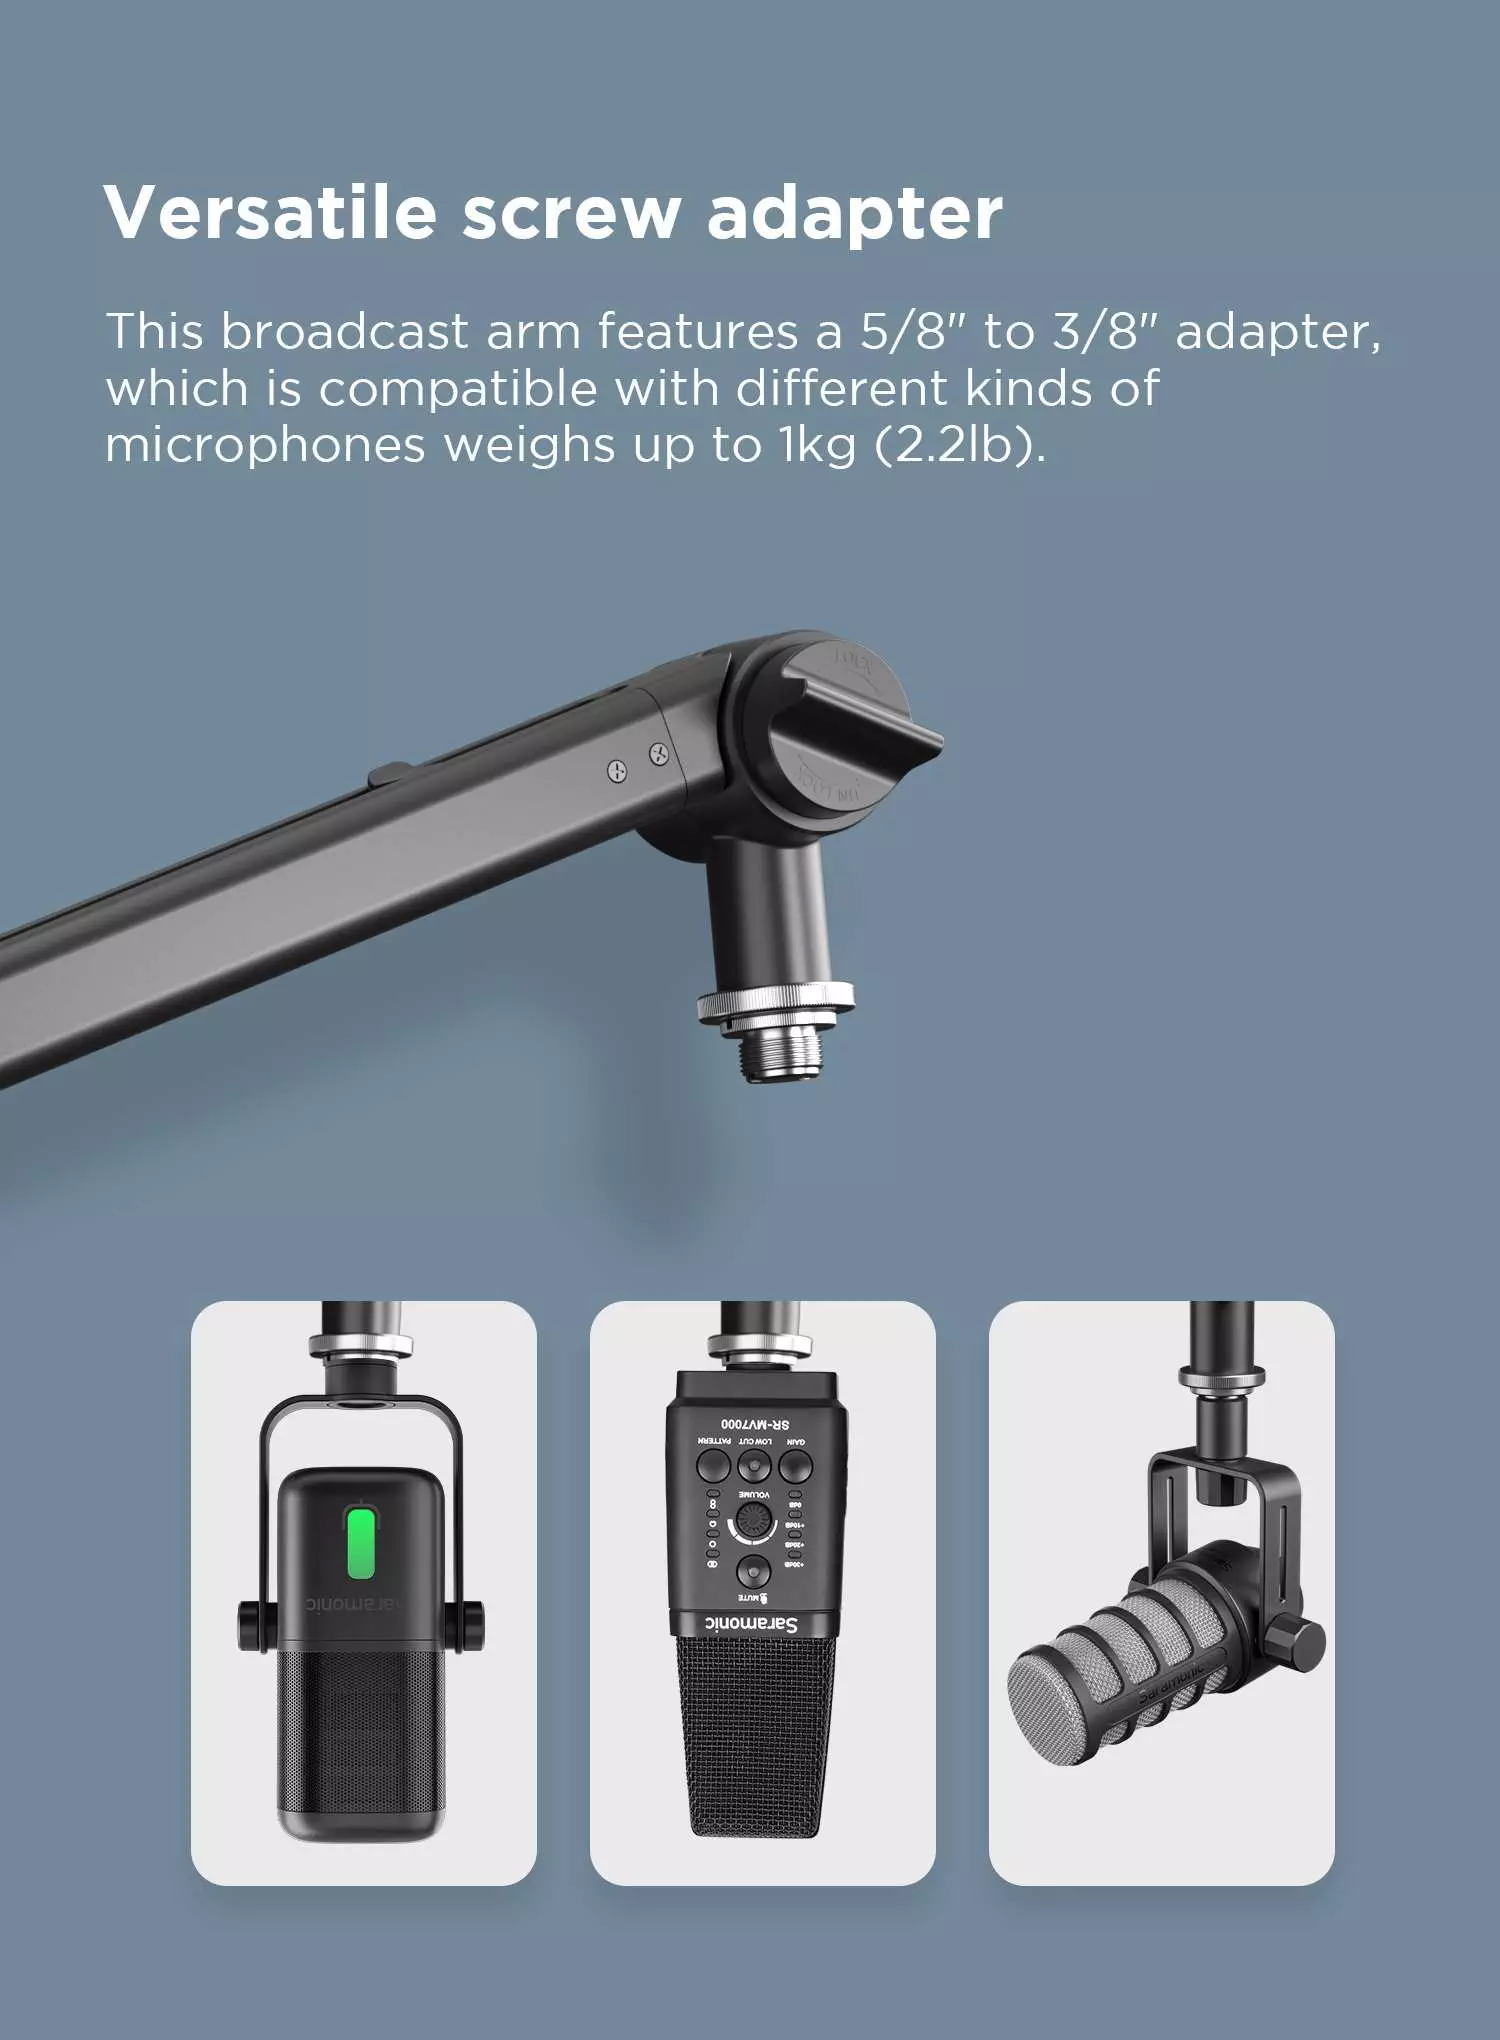 Saramonic SR-HC5 Microphone Boom Arm